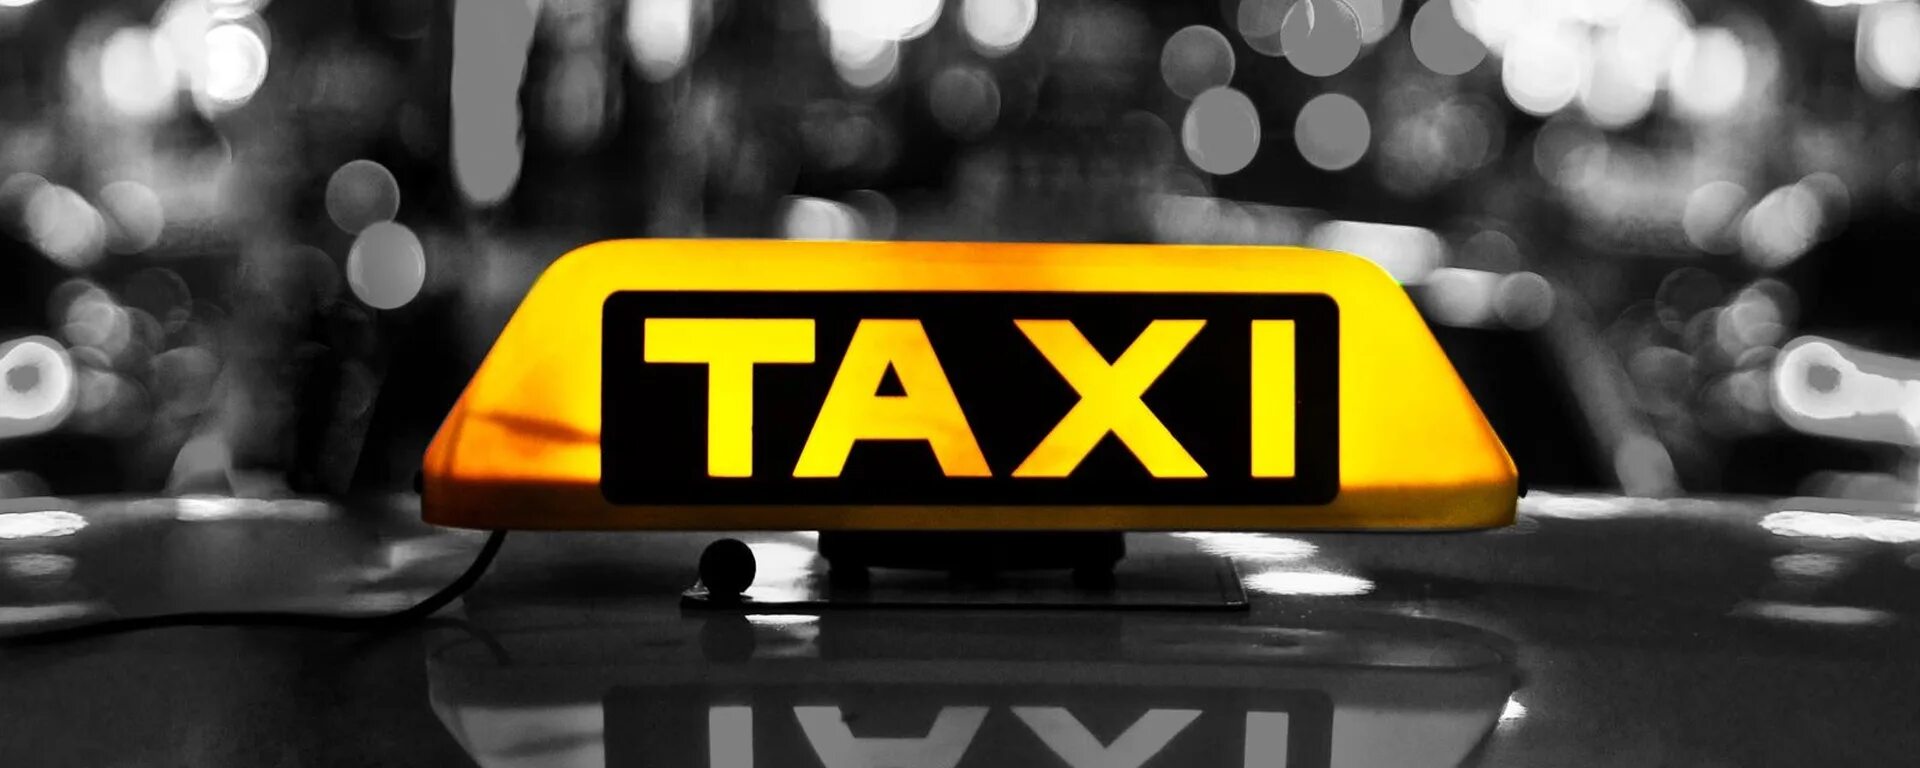 Такси селект. Визитка такси. Такси фон. Надпись такси. Баннер такси.